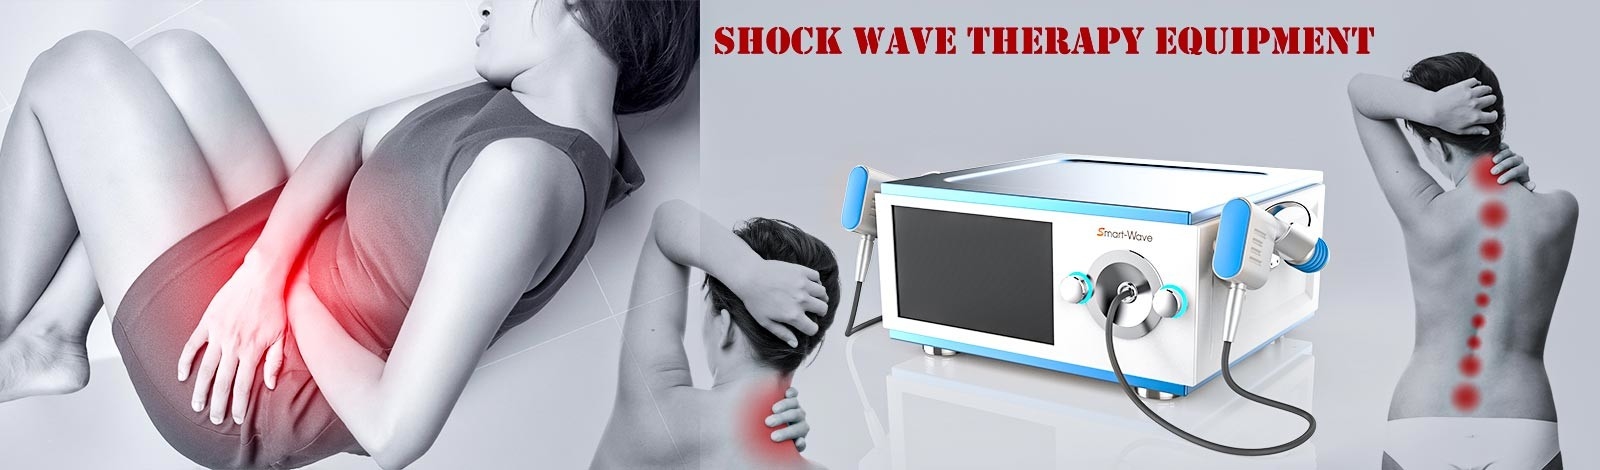 Shockwave Terapi Makinesi